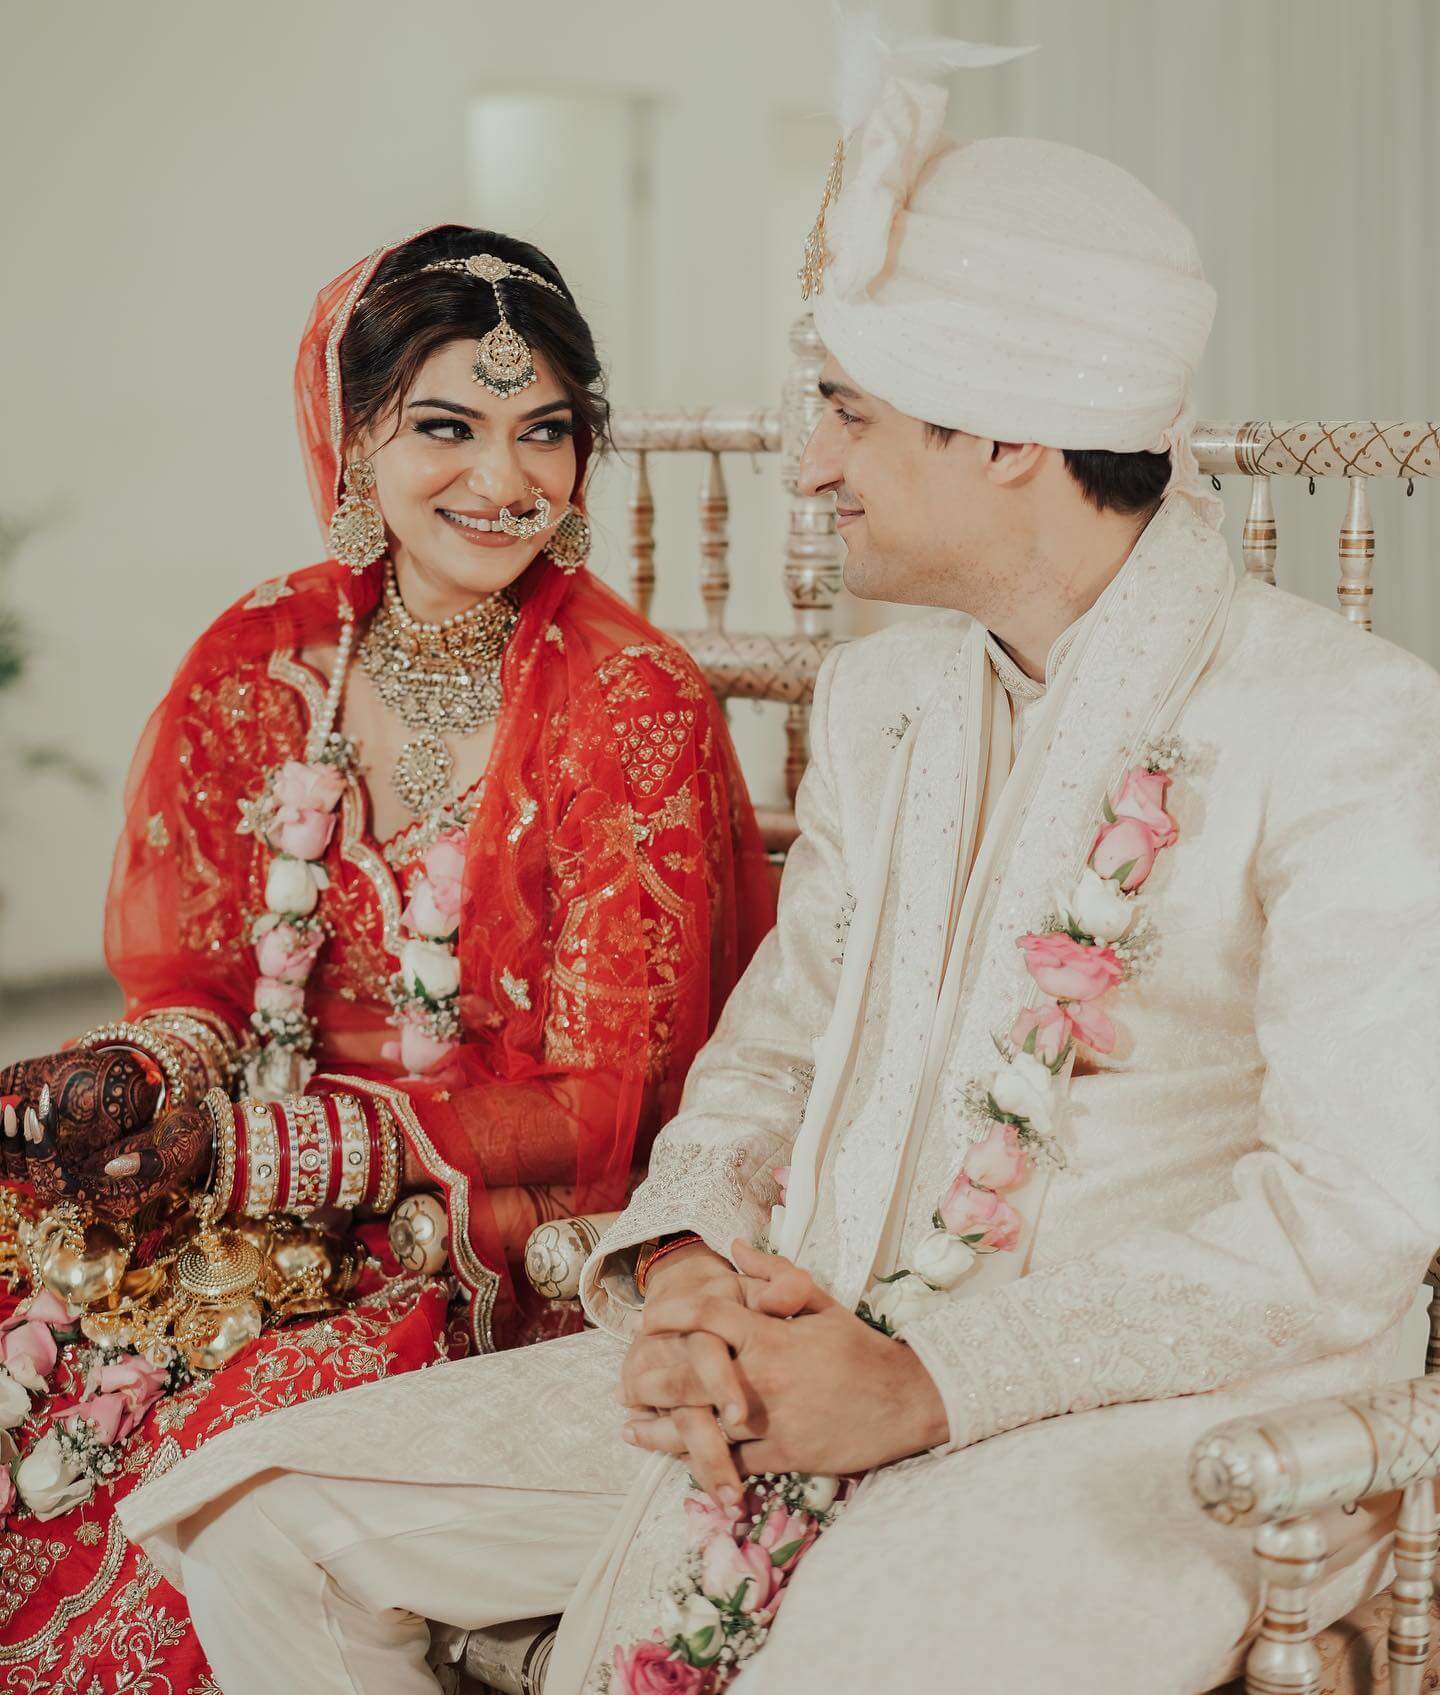 Aditi Gautam and Mickhail's marriage